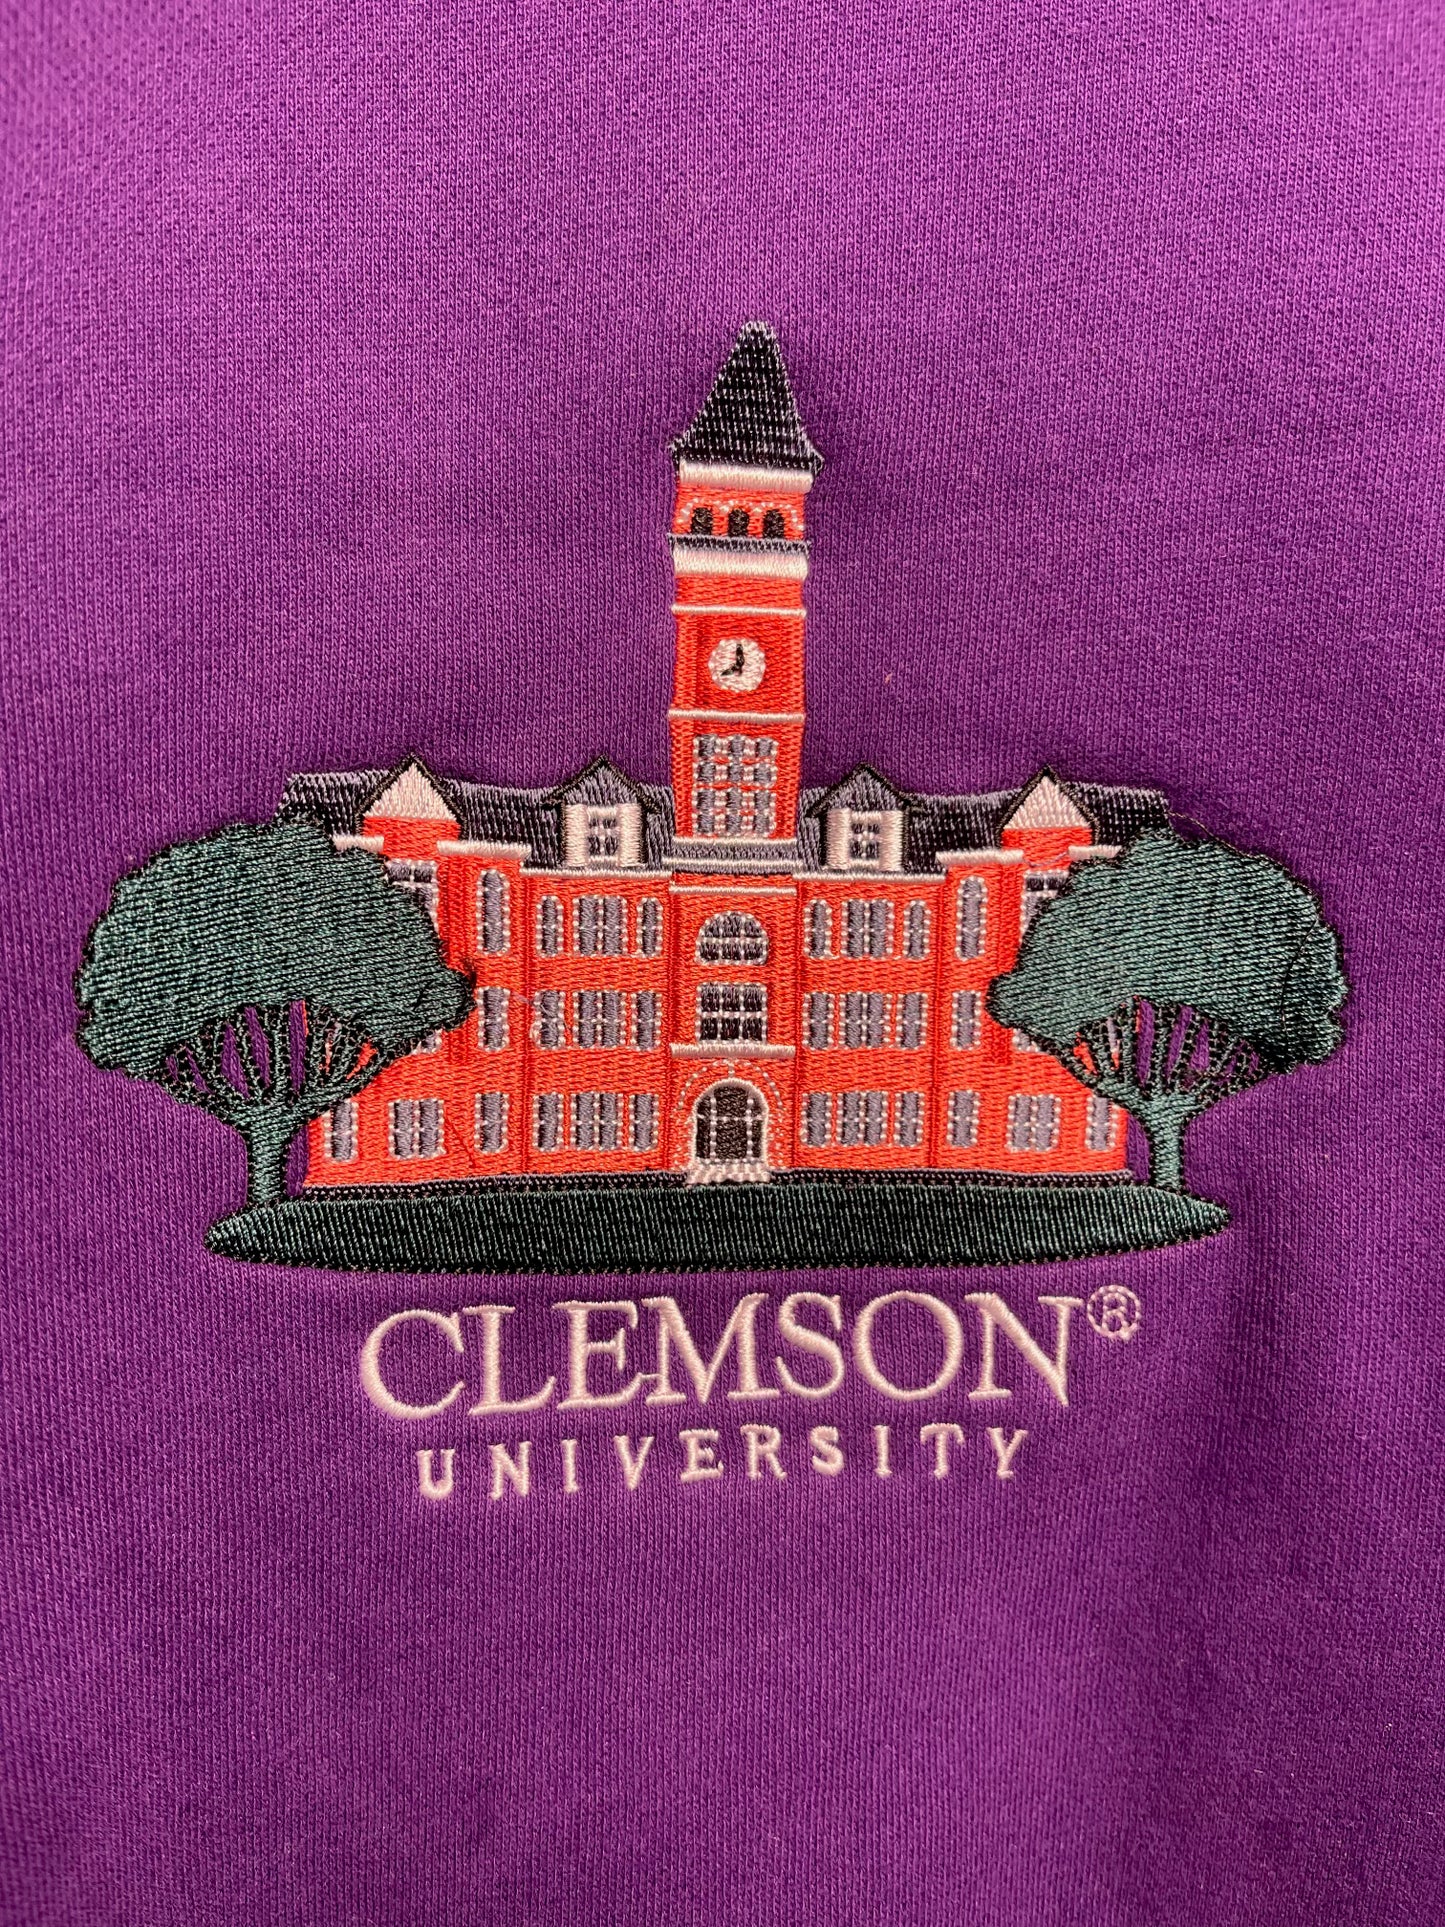 Clemson University Crewneck - Purple